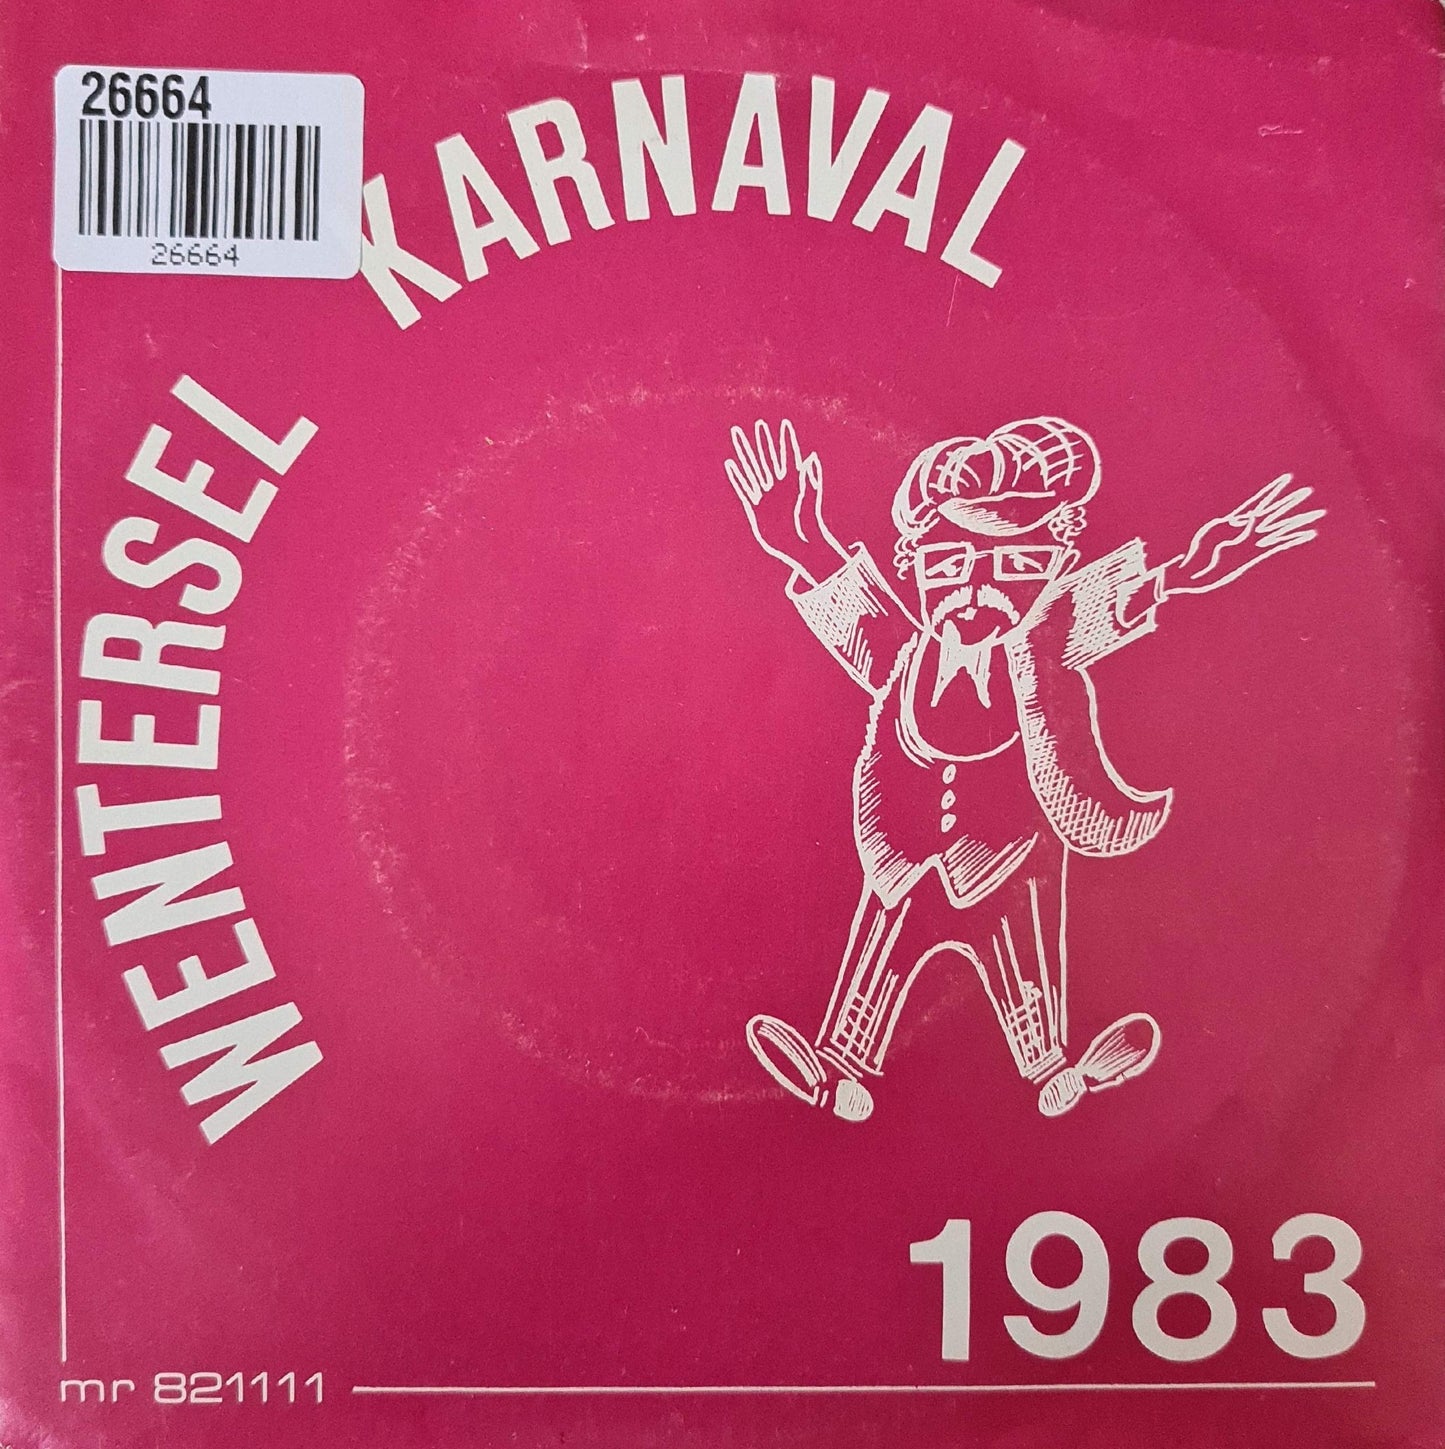 Wentersel Carnaval 1983 26664 Vinyl Singles VINYLSINGLES.NL